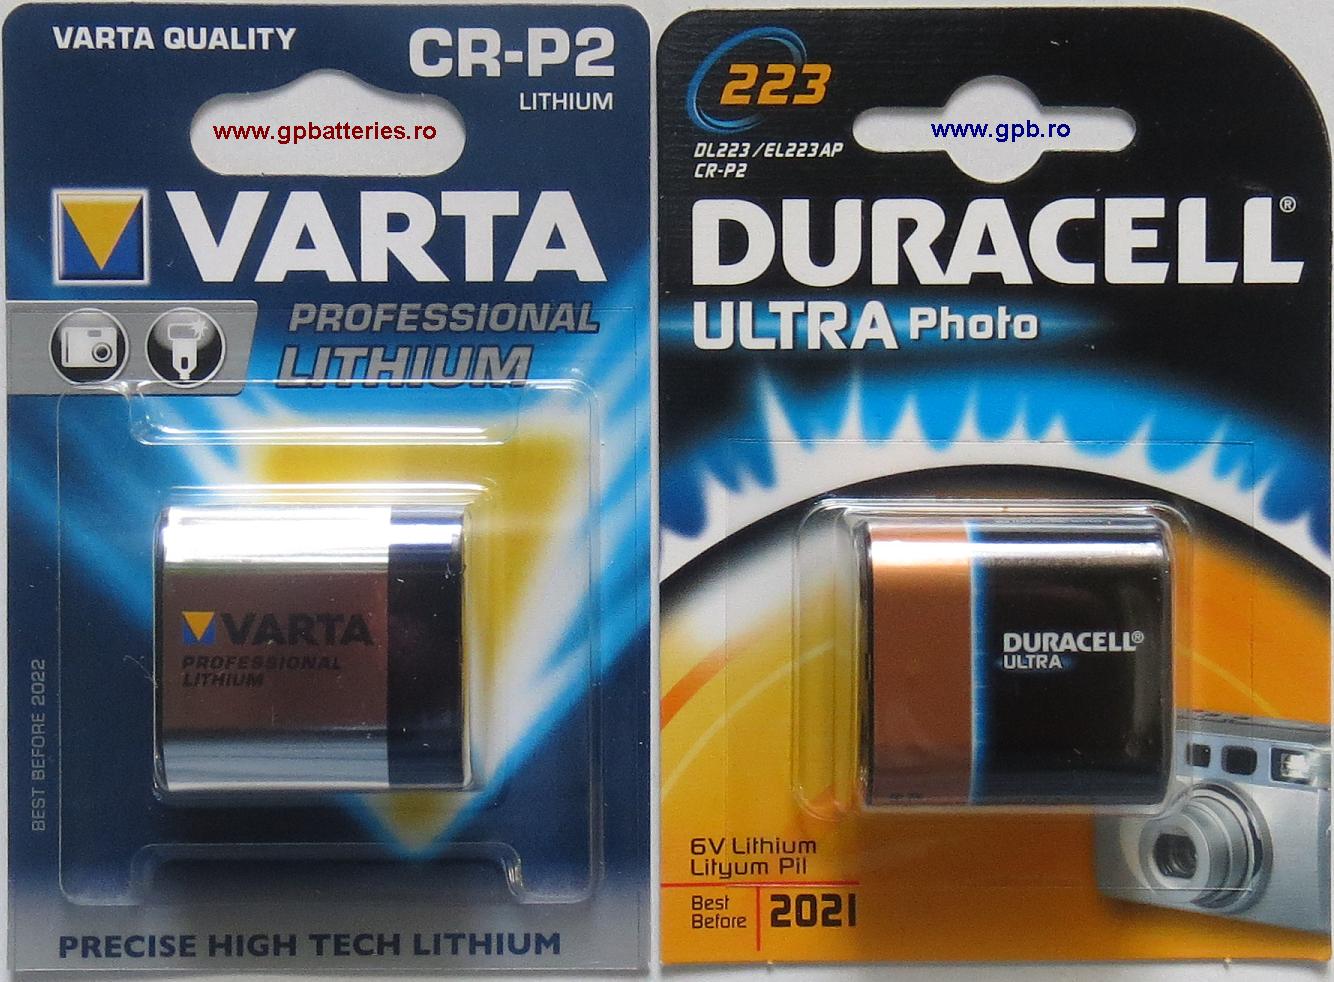 Duracell baterie CRP2 litiu 